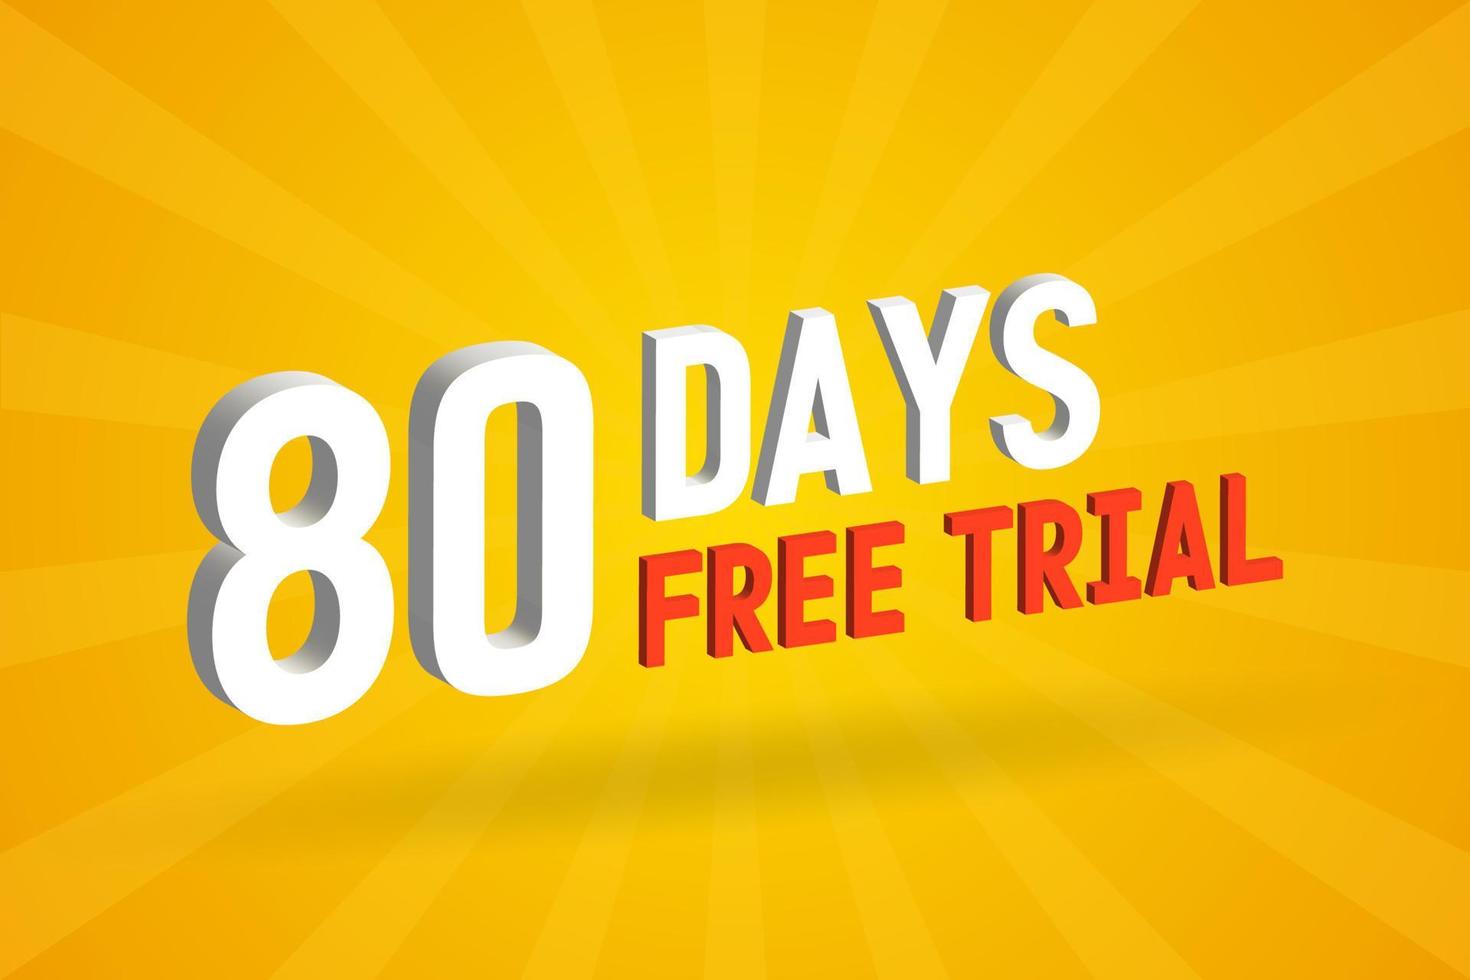 oferta gratuita 80 días de prueba gratuita texto 3d stock vector